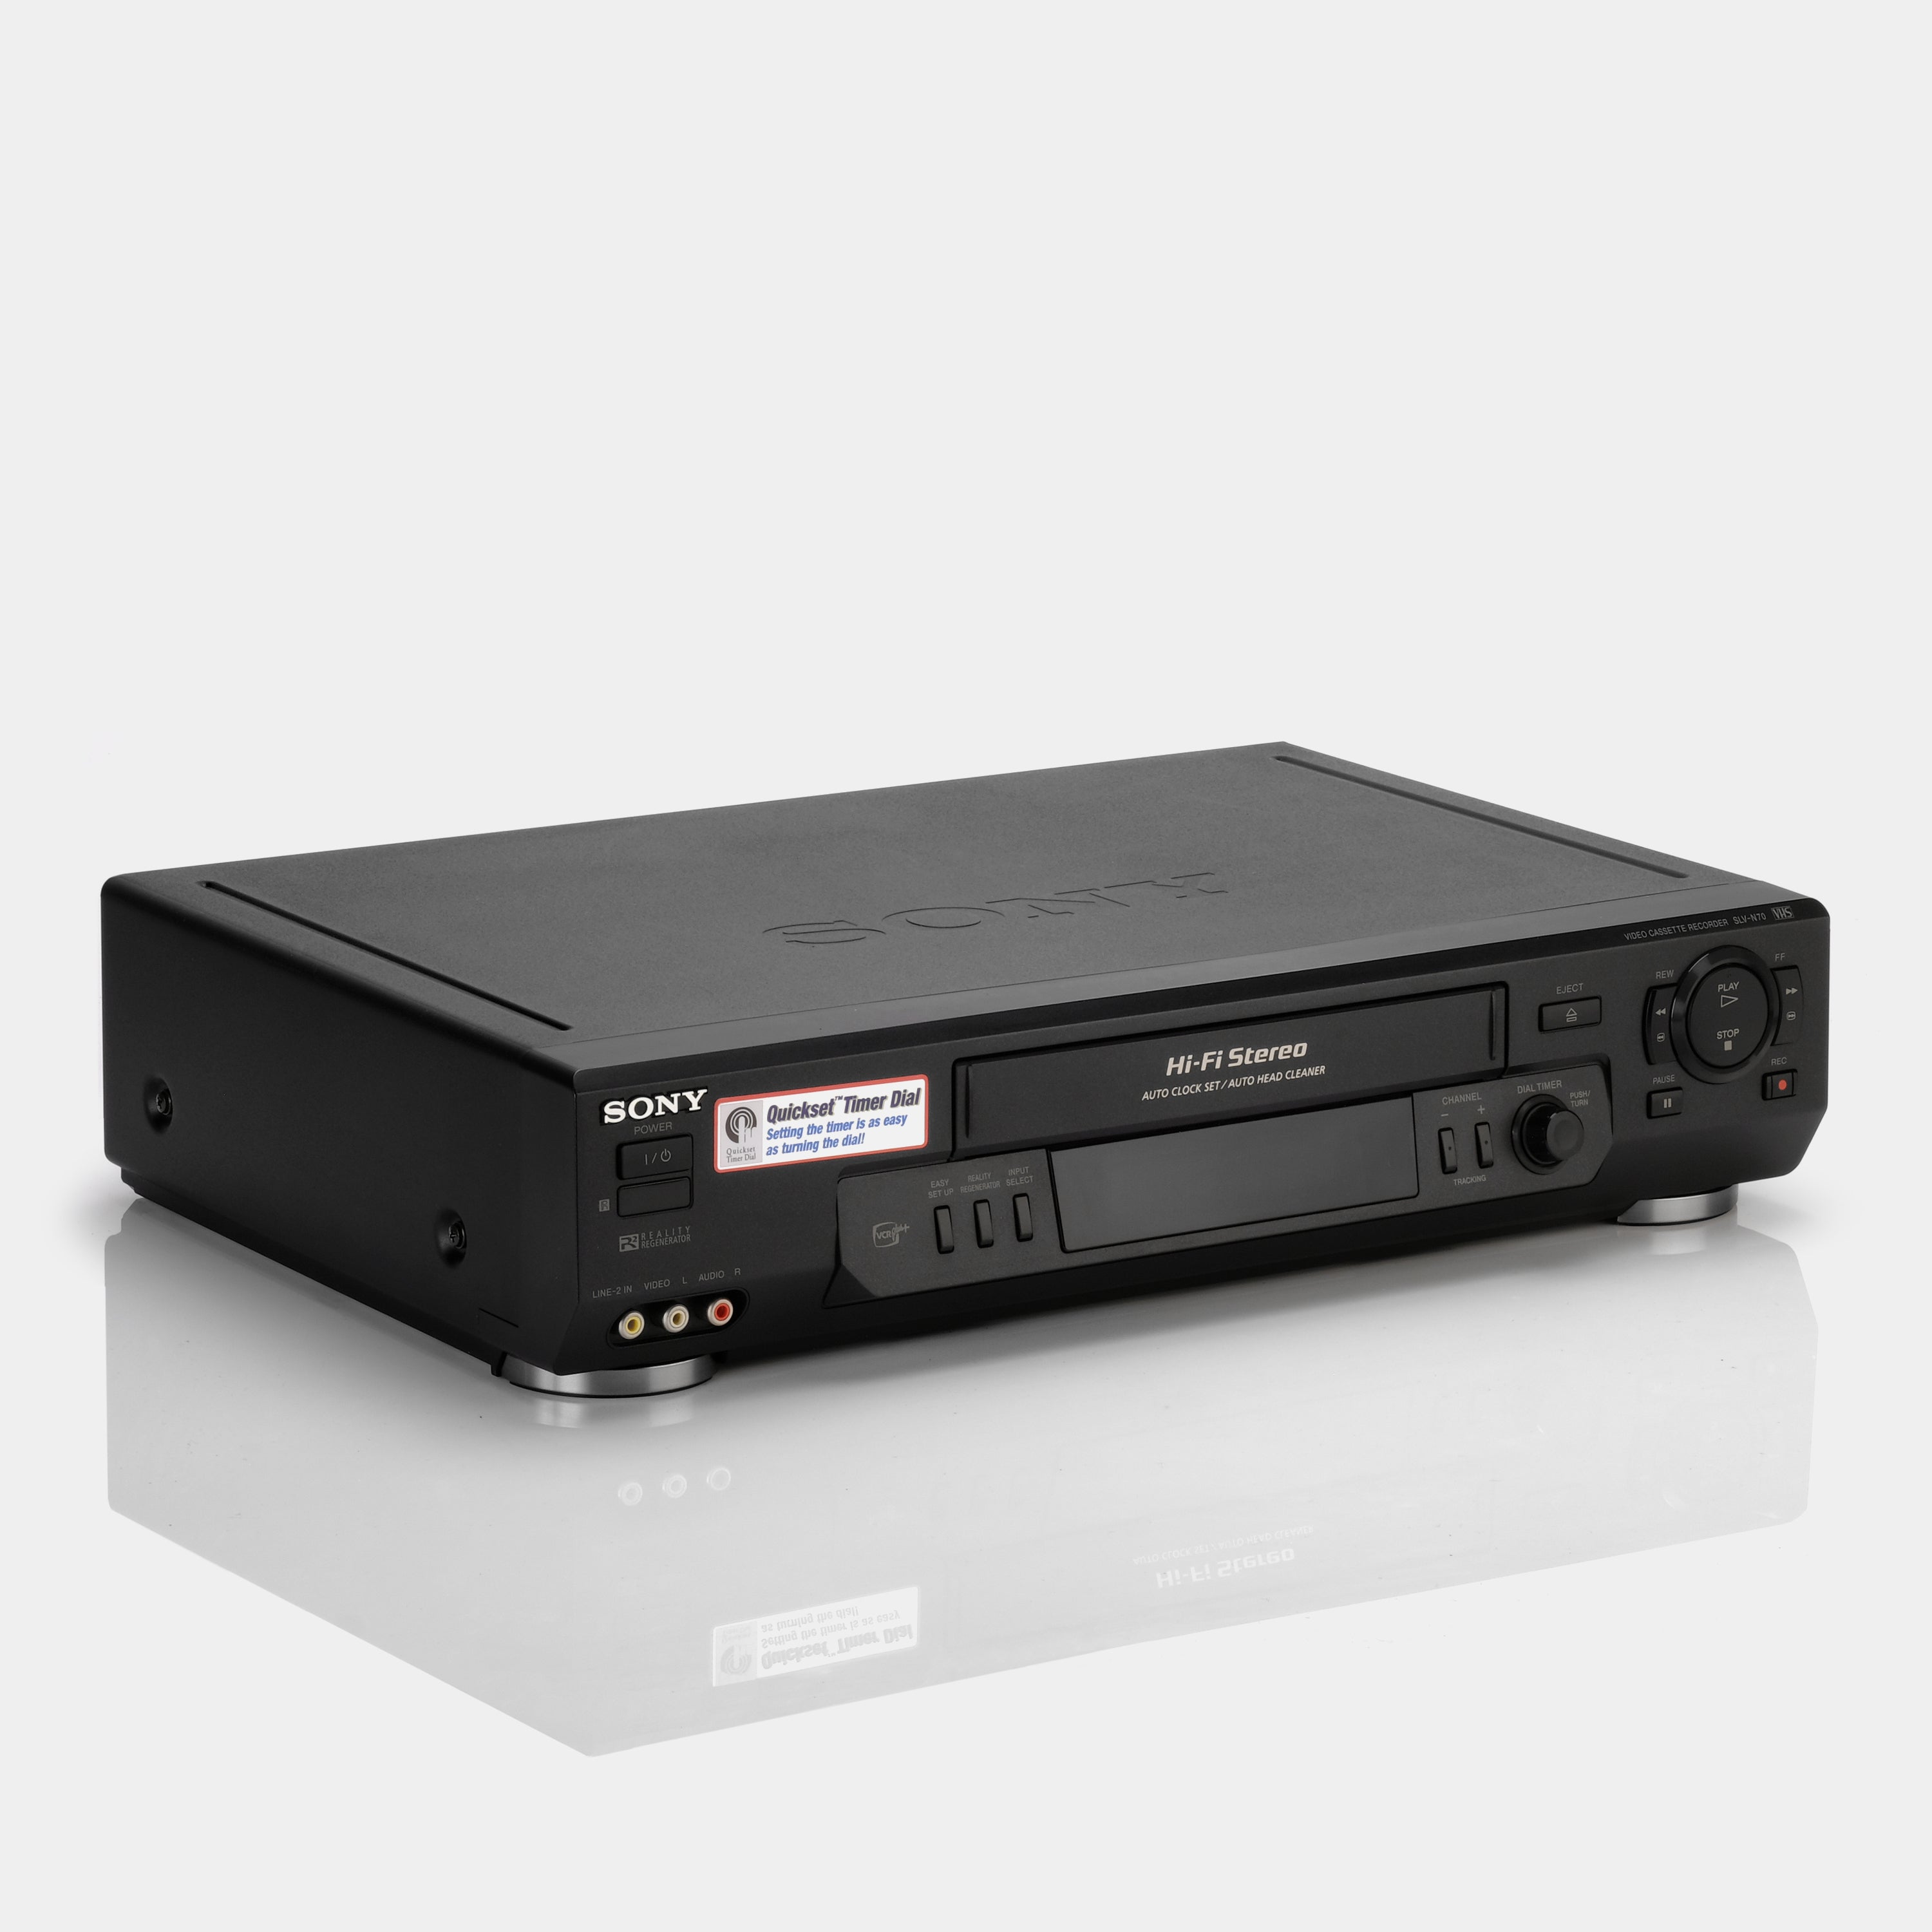 Sony SLV-N70 VCR VHS Player